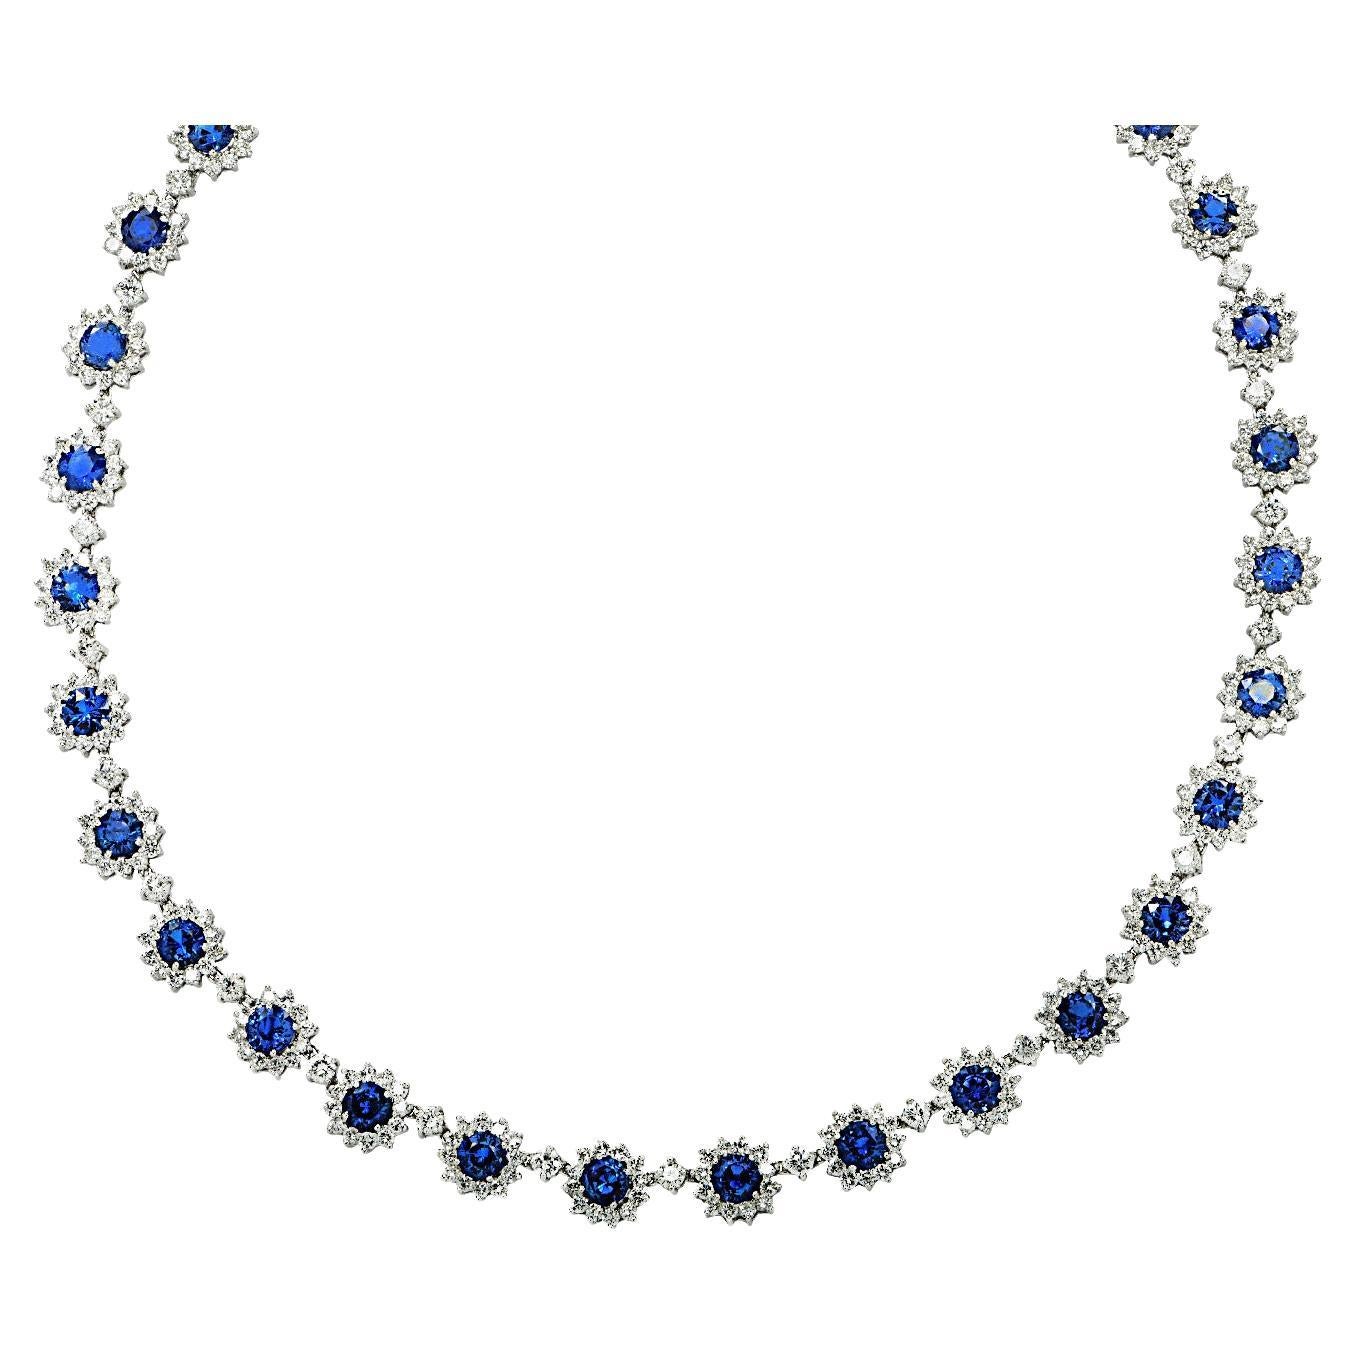 33.34 Carat Sapphire and White Diamond Necklace 